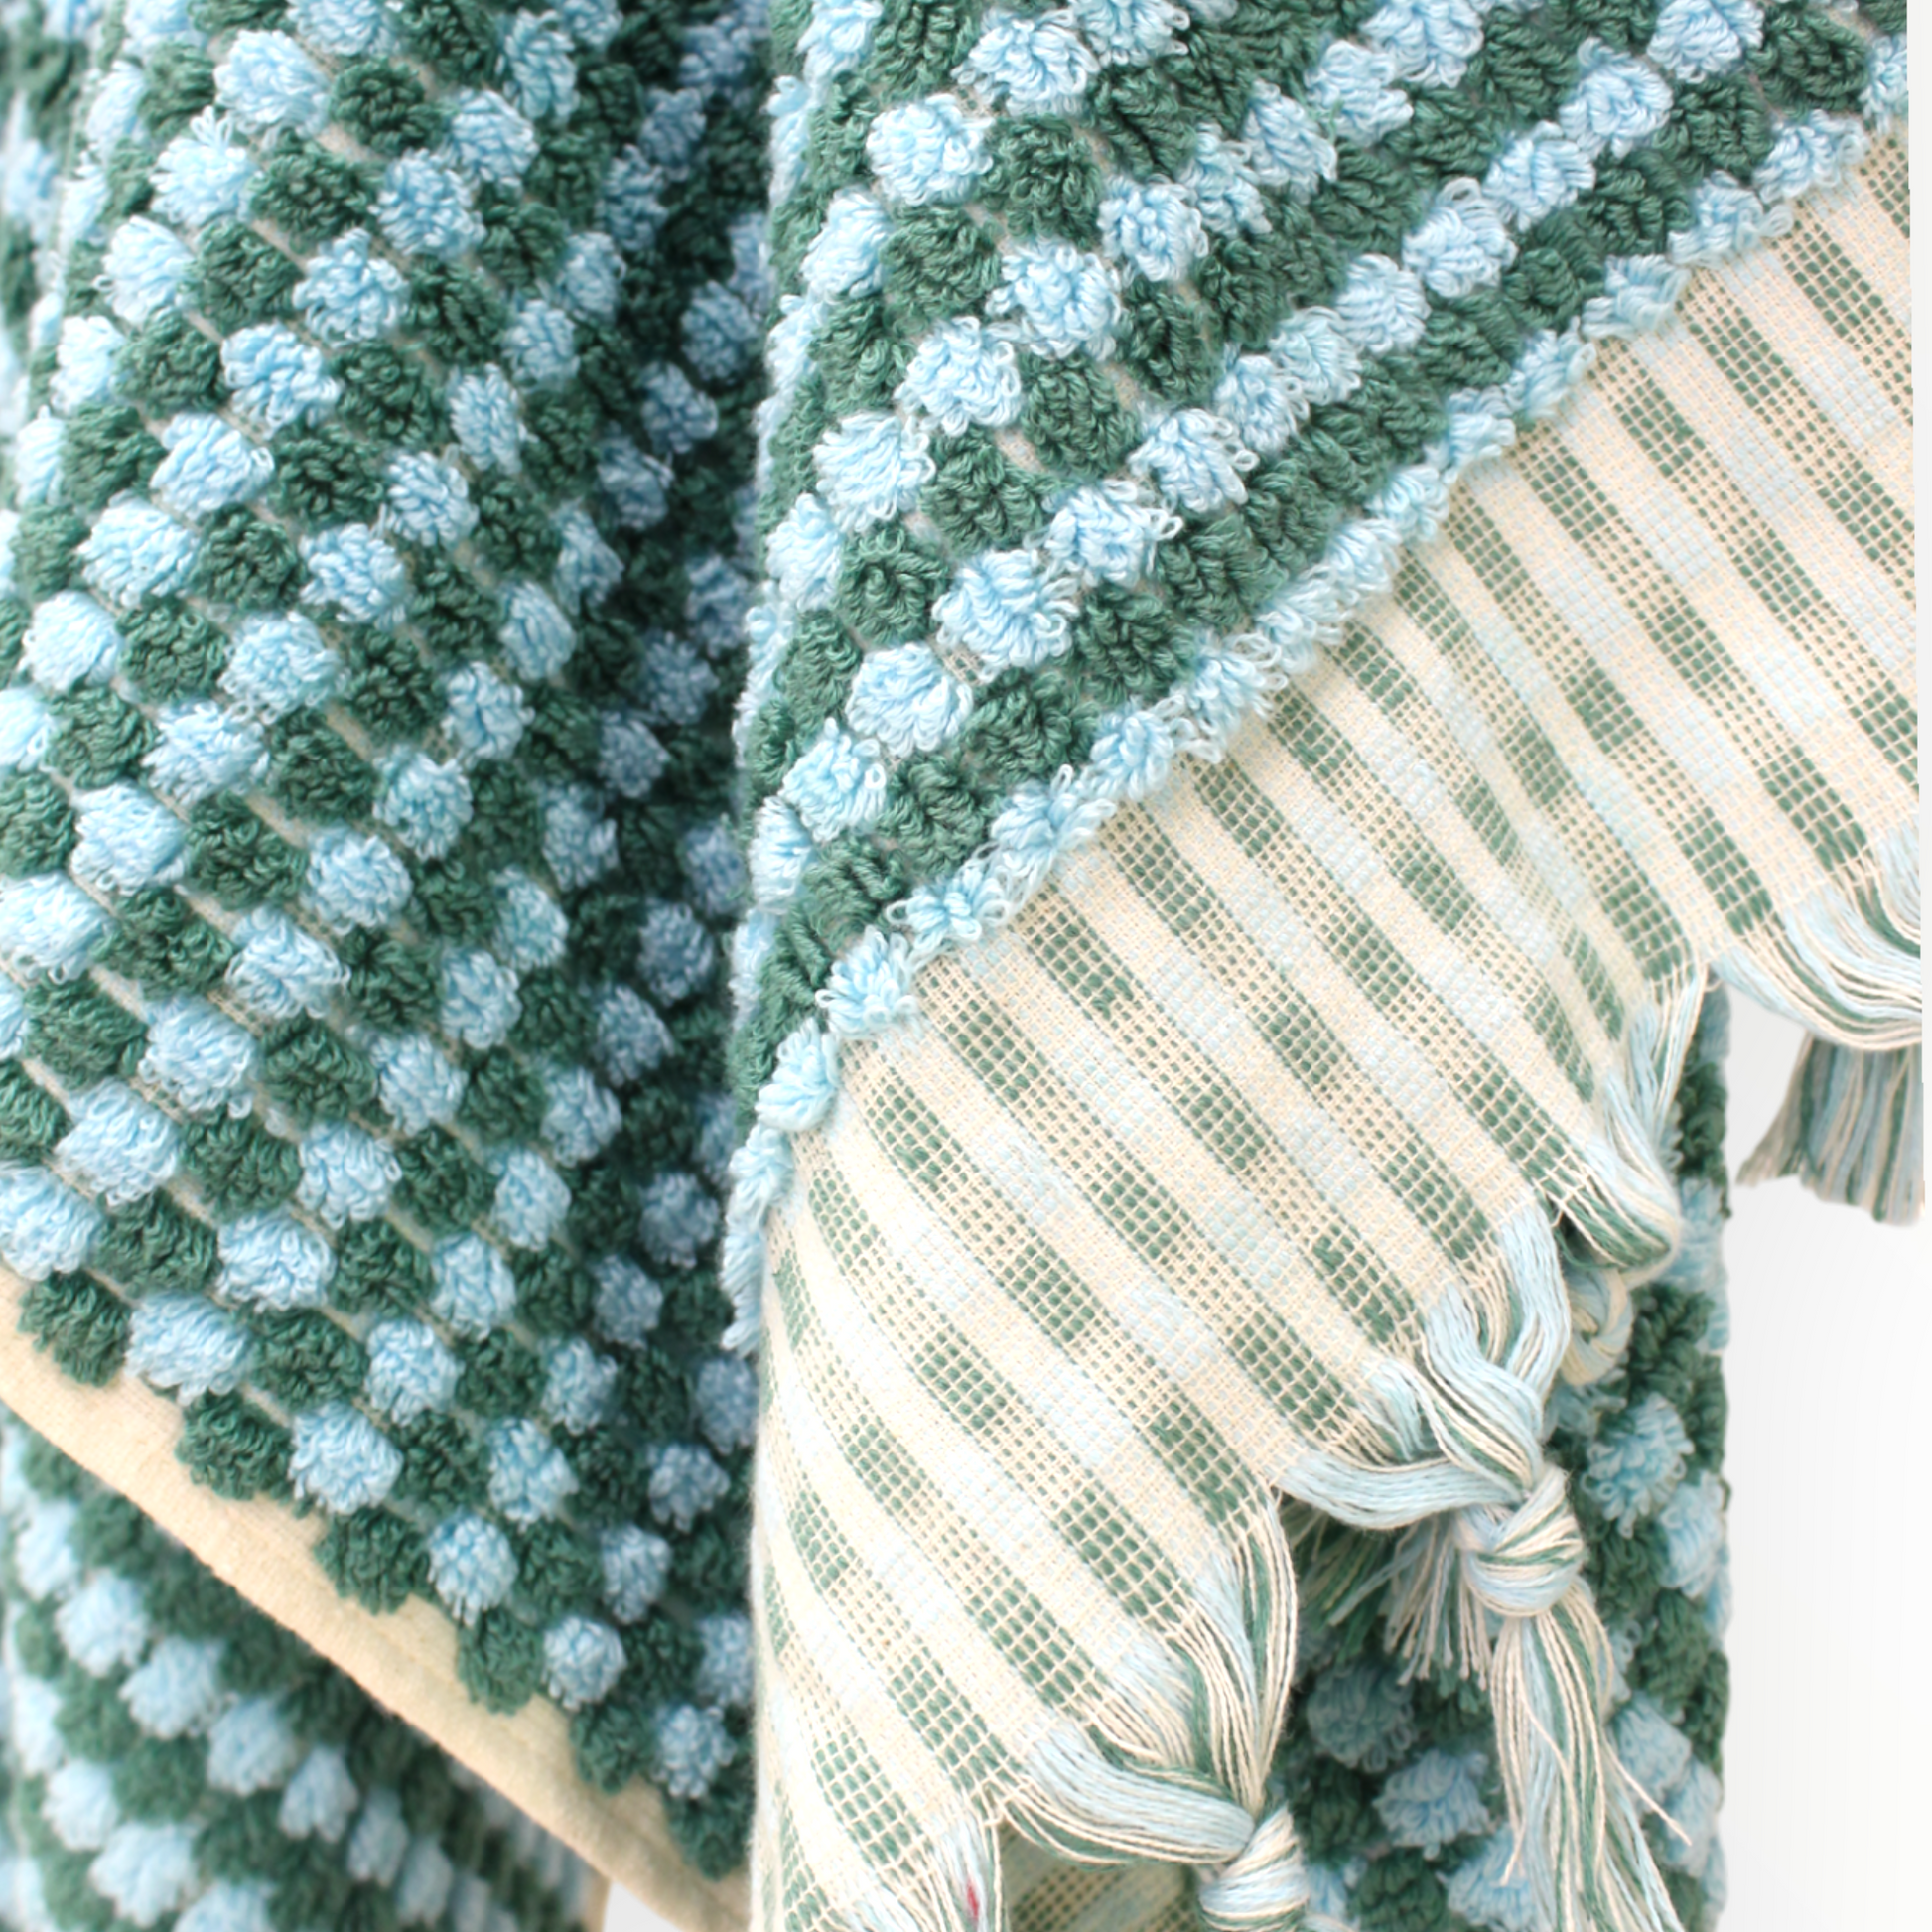 Turkish Terry Towel Shopping Bag & Beach Bag – Dervis Natural Textile